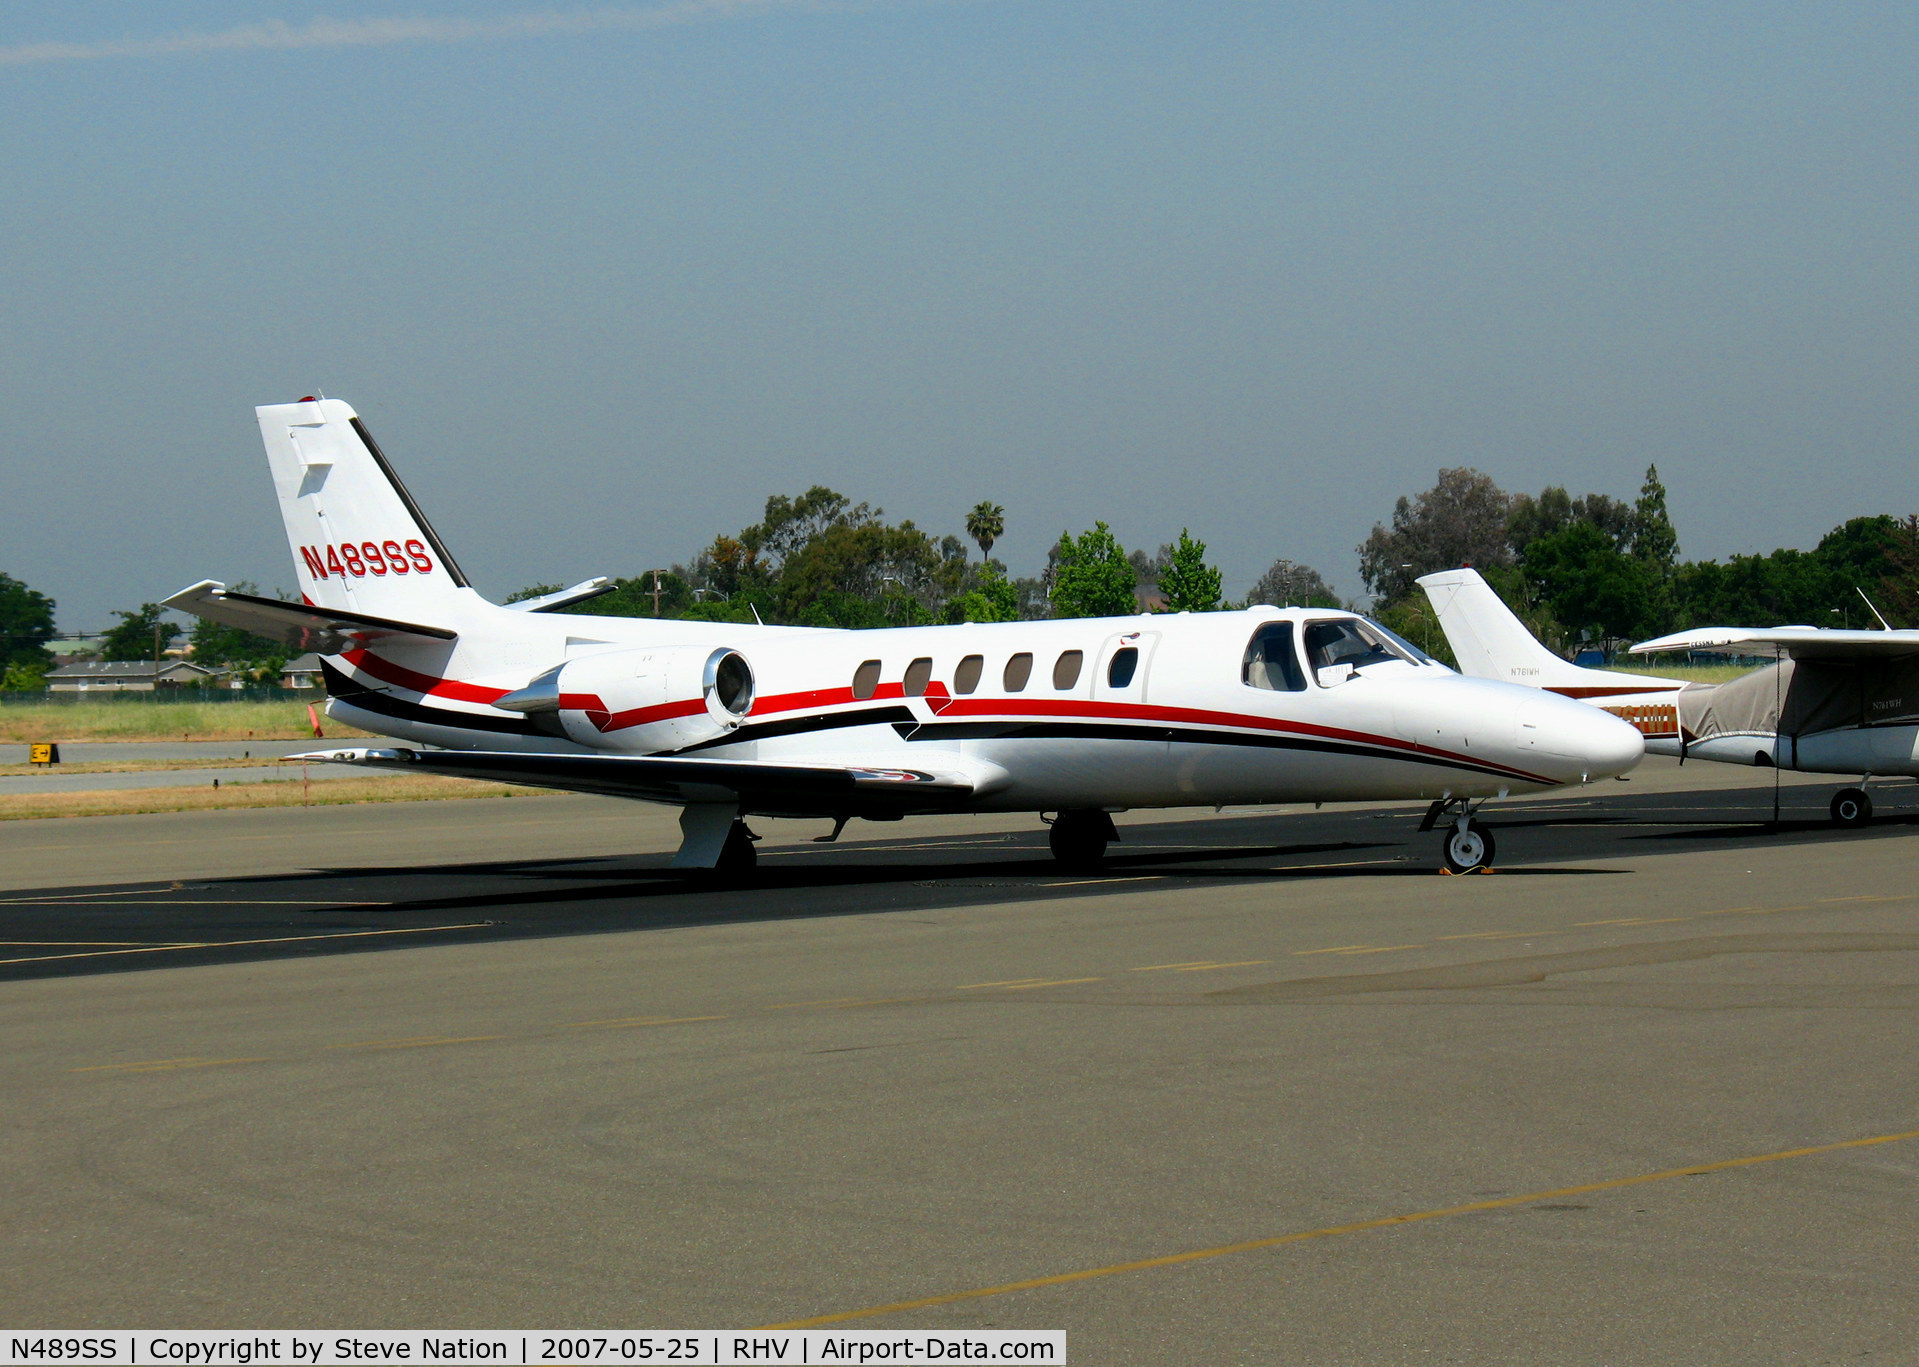 N489SS, 1984 Cessna 550 C/N 550-0489, Sierra Sierra Enterprises (Minden, NV) 1984 Cessna 550 visiting @ Reid-Hillview Airport, CA